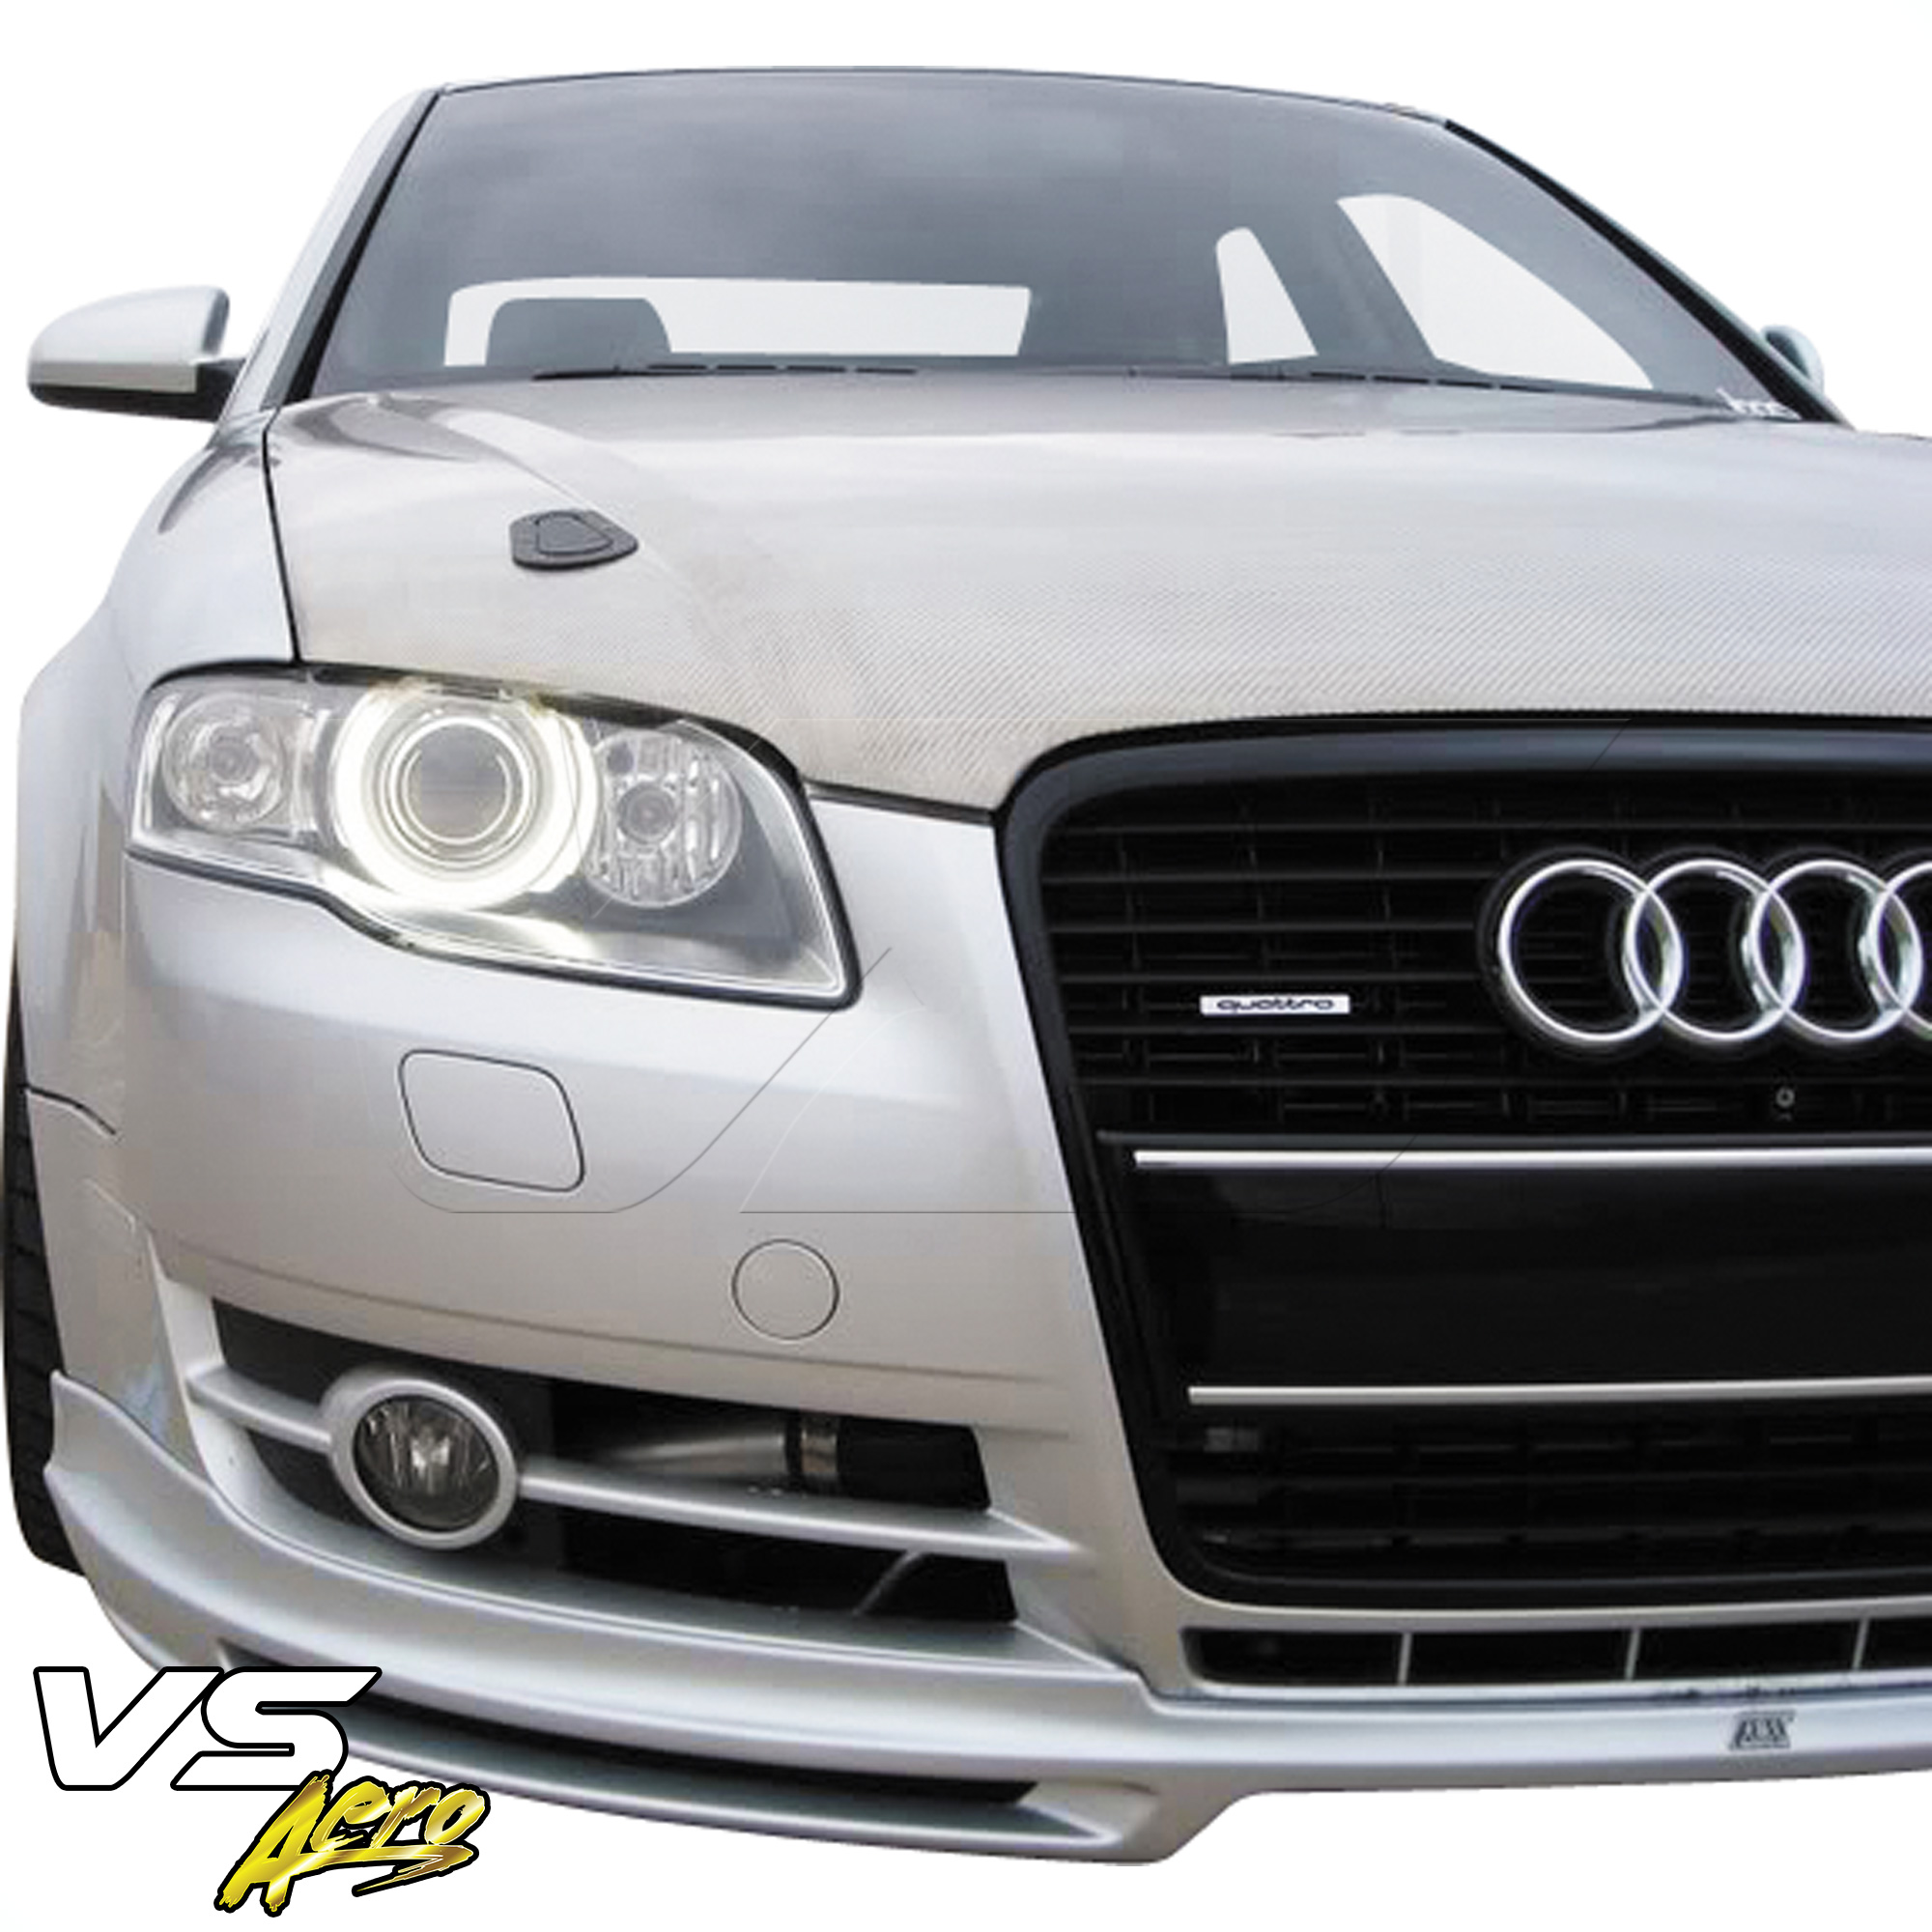 VSaero FRP AB Front Lip Valance > Audi A4 B7 2006-2008 - Image 8